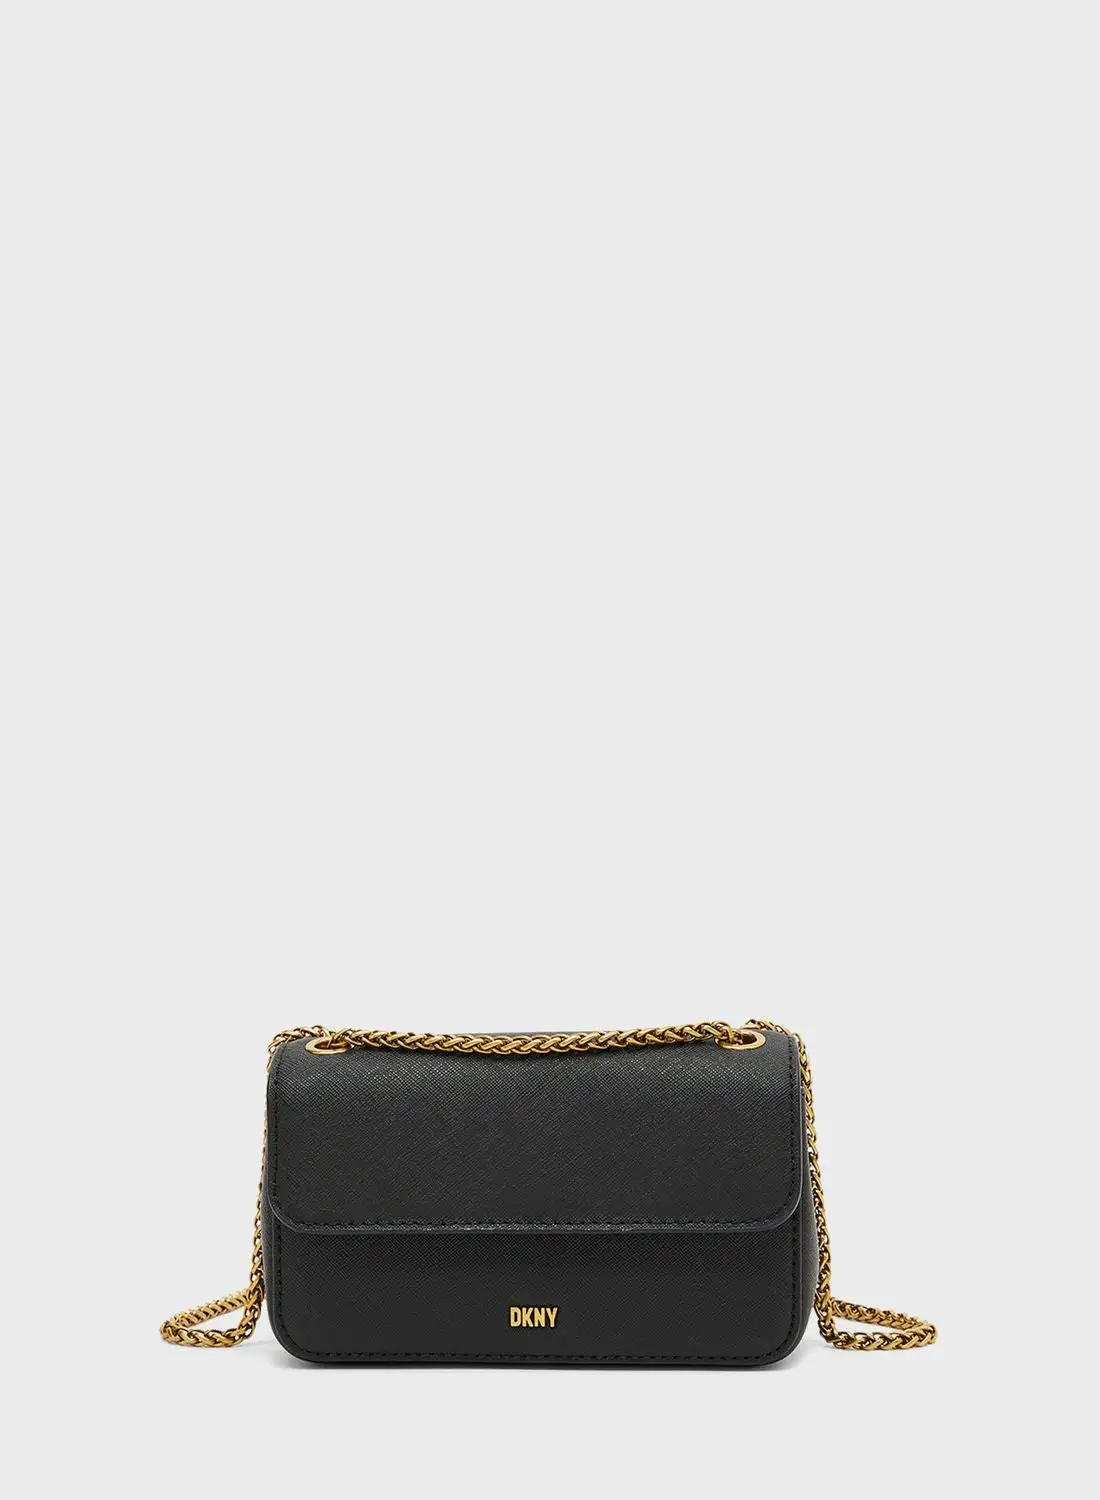 DKNY Minnie Leather Shoulder Bag